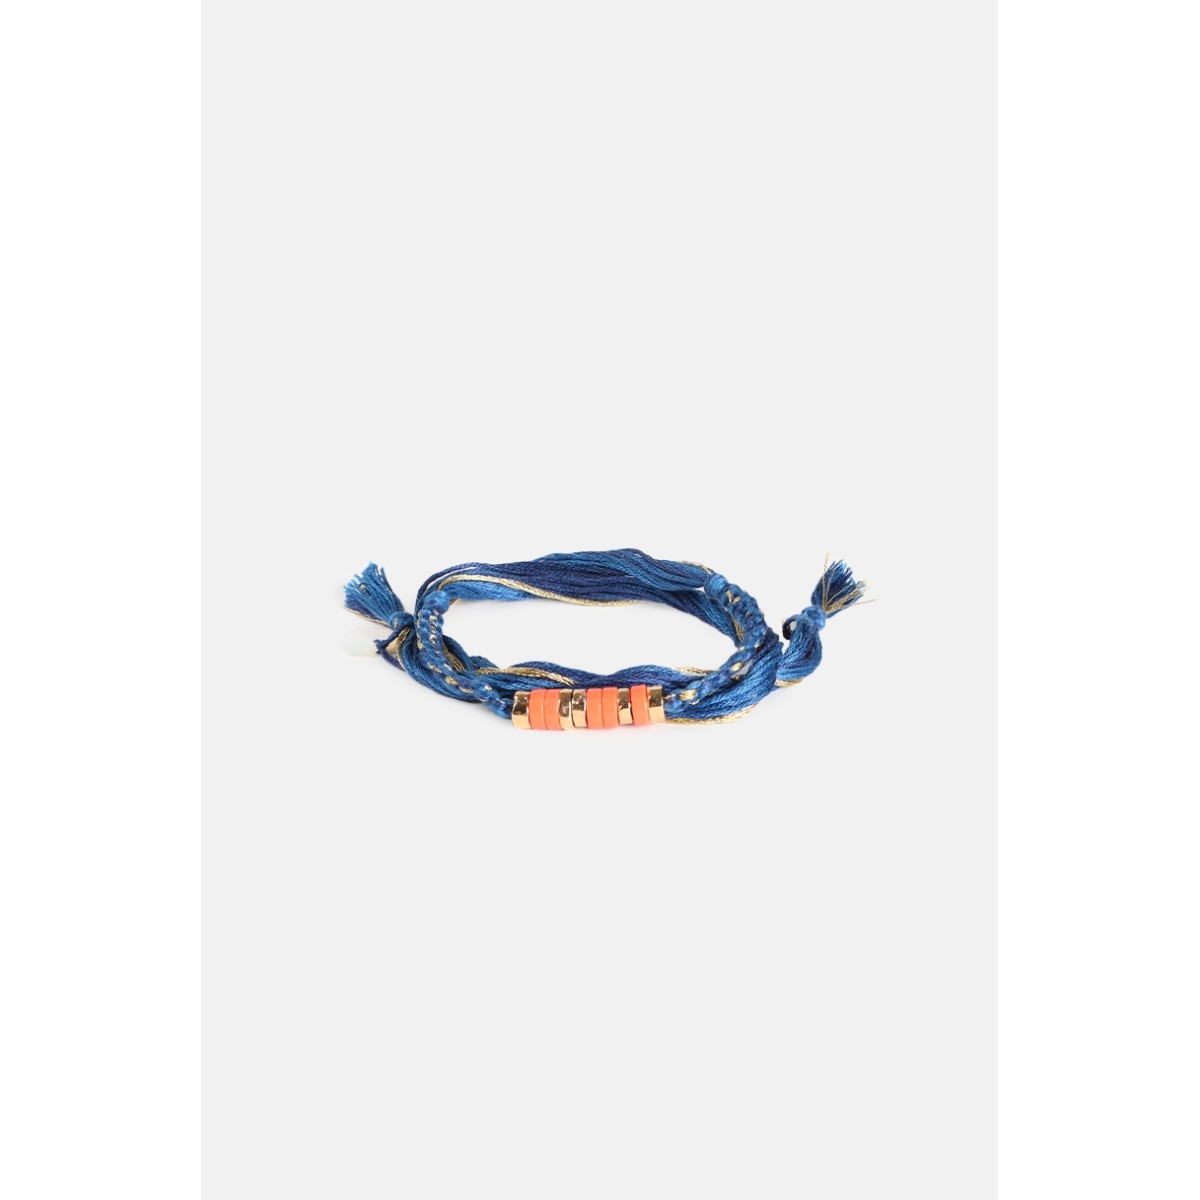 Takayamas bracelet Aurélie Bidermann - Outlet